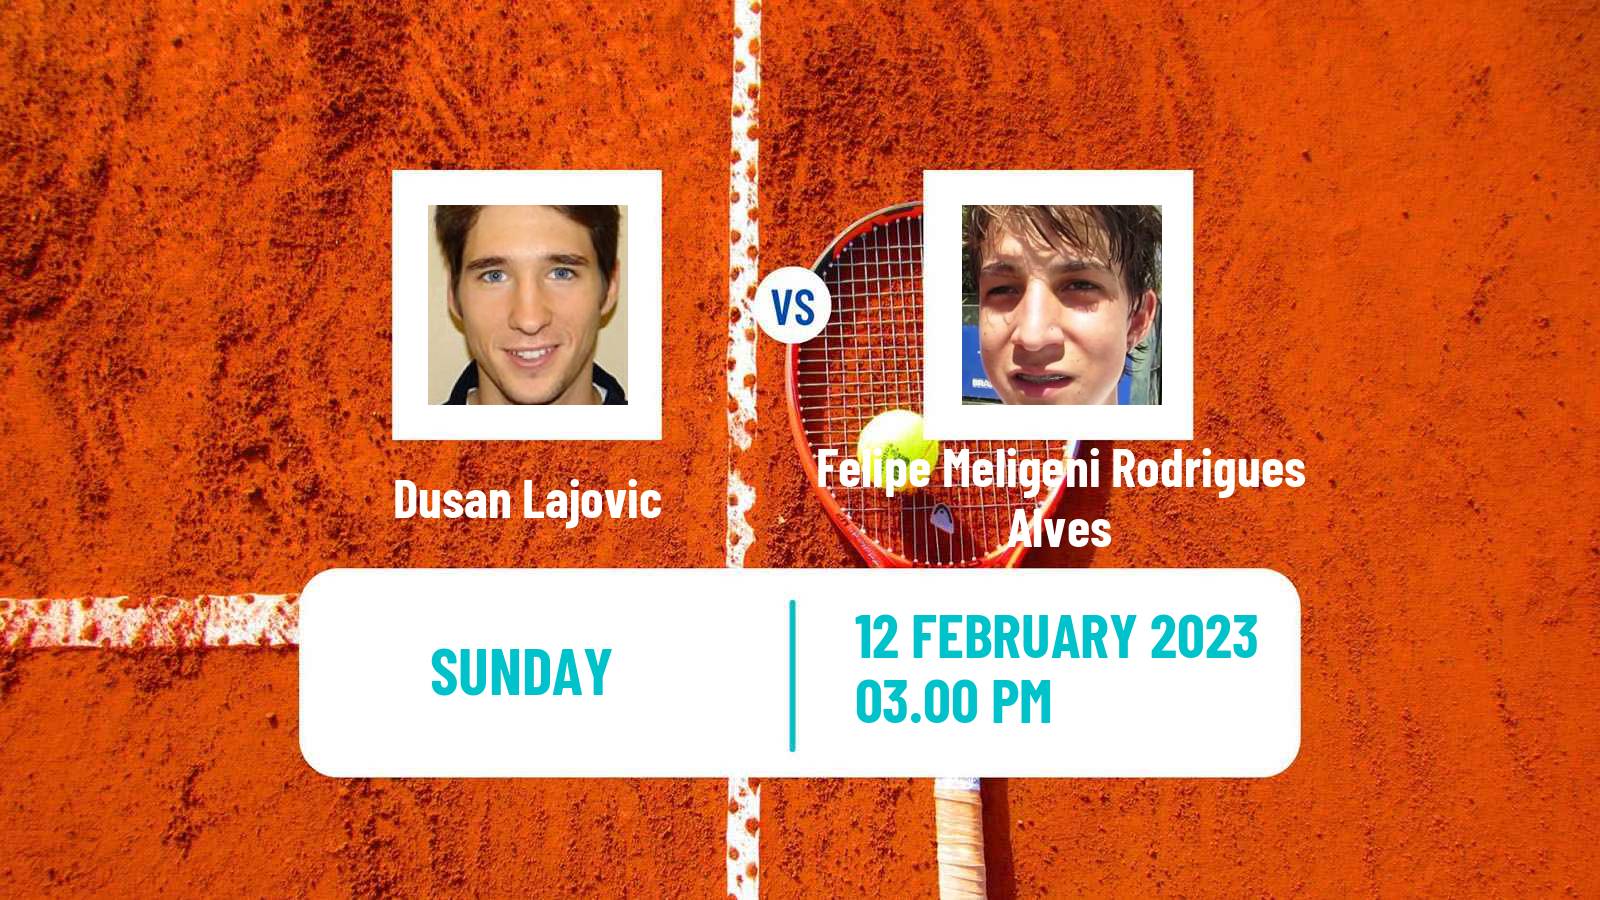 Tennis ATP Buenos Aires Dusan Lajovic - Felipe Meligeni Rodrigues Alves